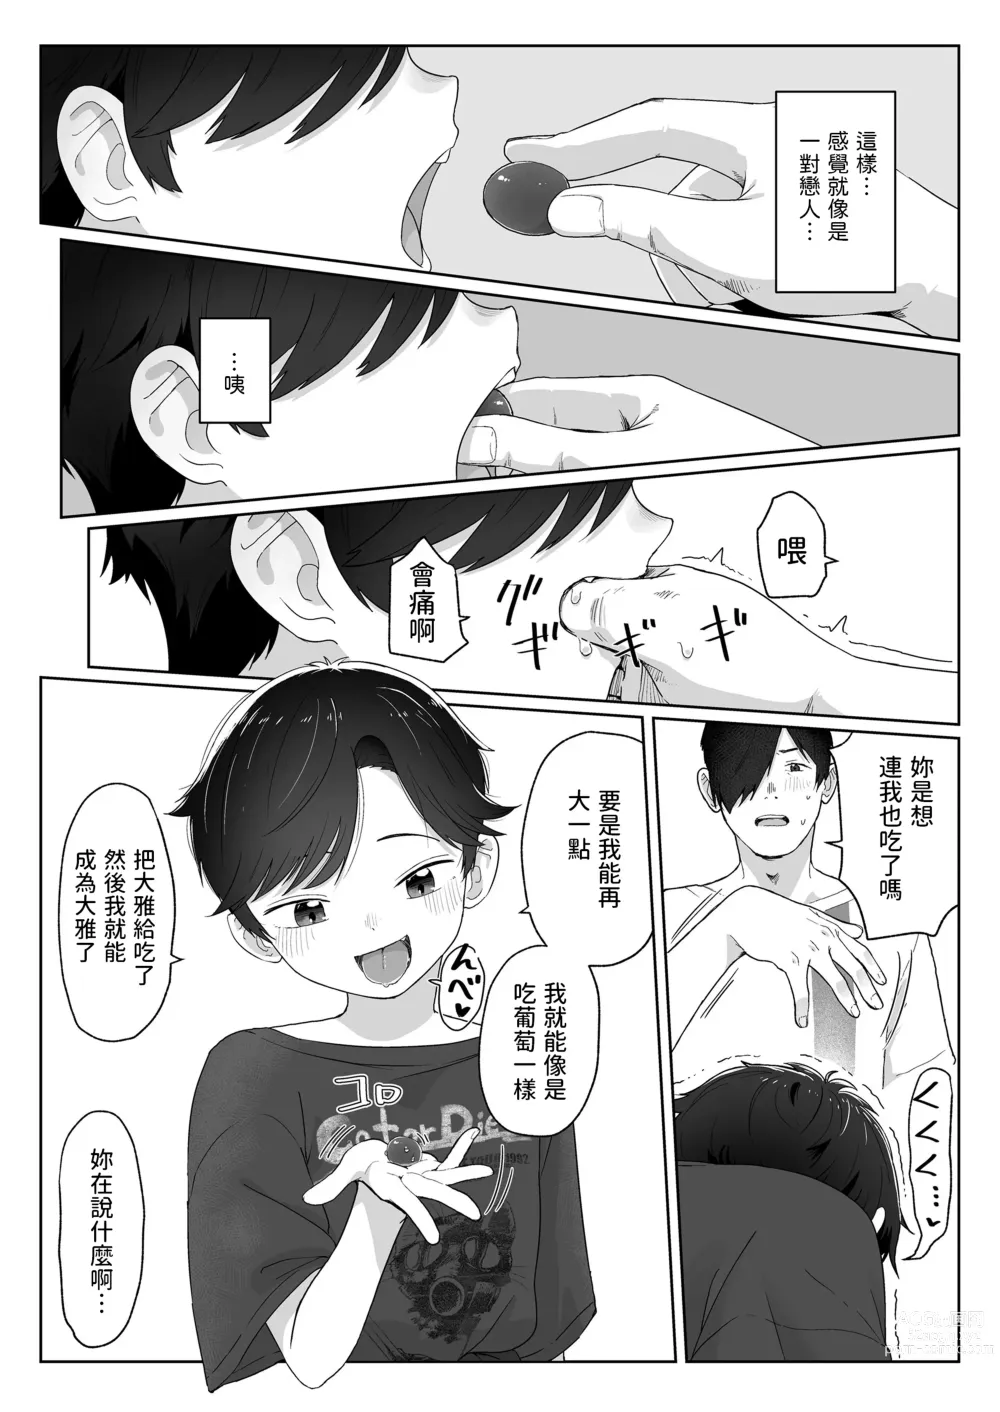 Page 5 of manga Ore ga Taberu kara